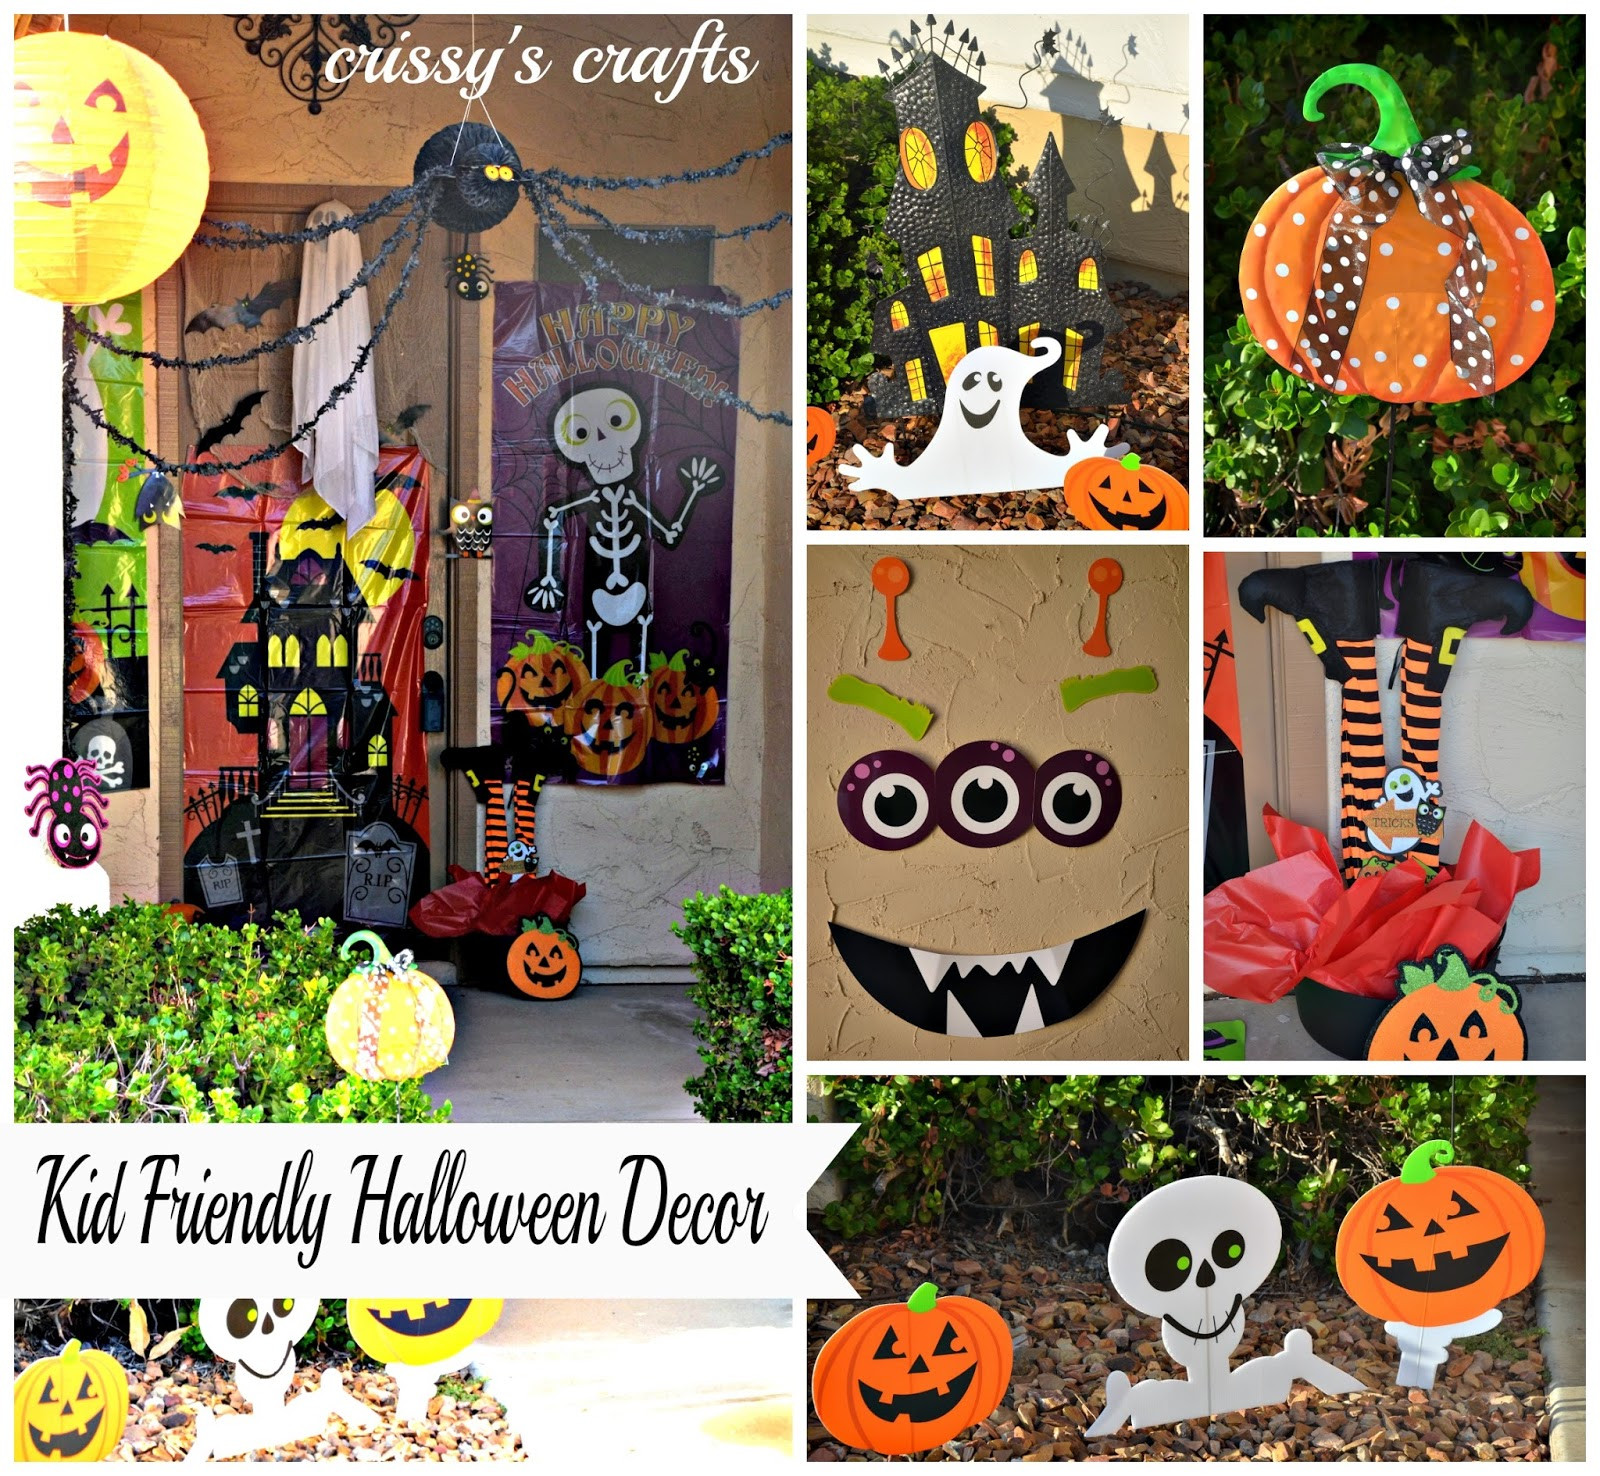 Kid Friendly Halloween Party Ideas
 Crissy s Crafts Kid Friendly Halloween Party